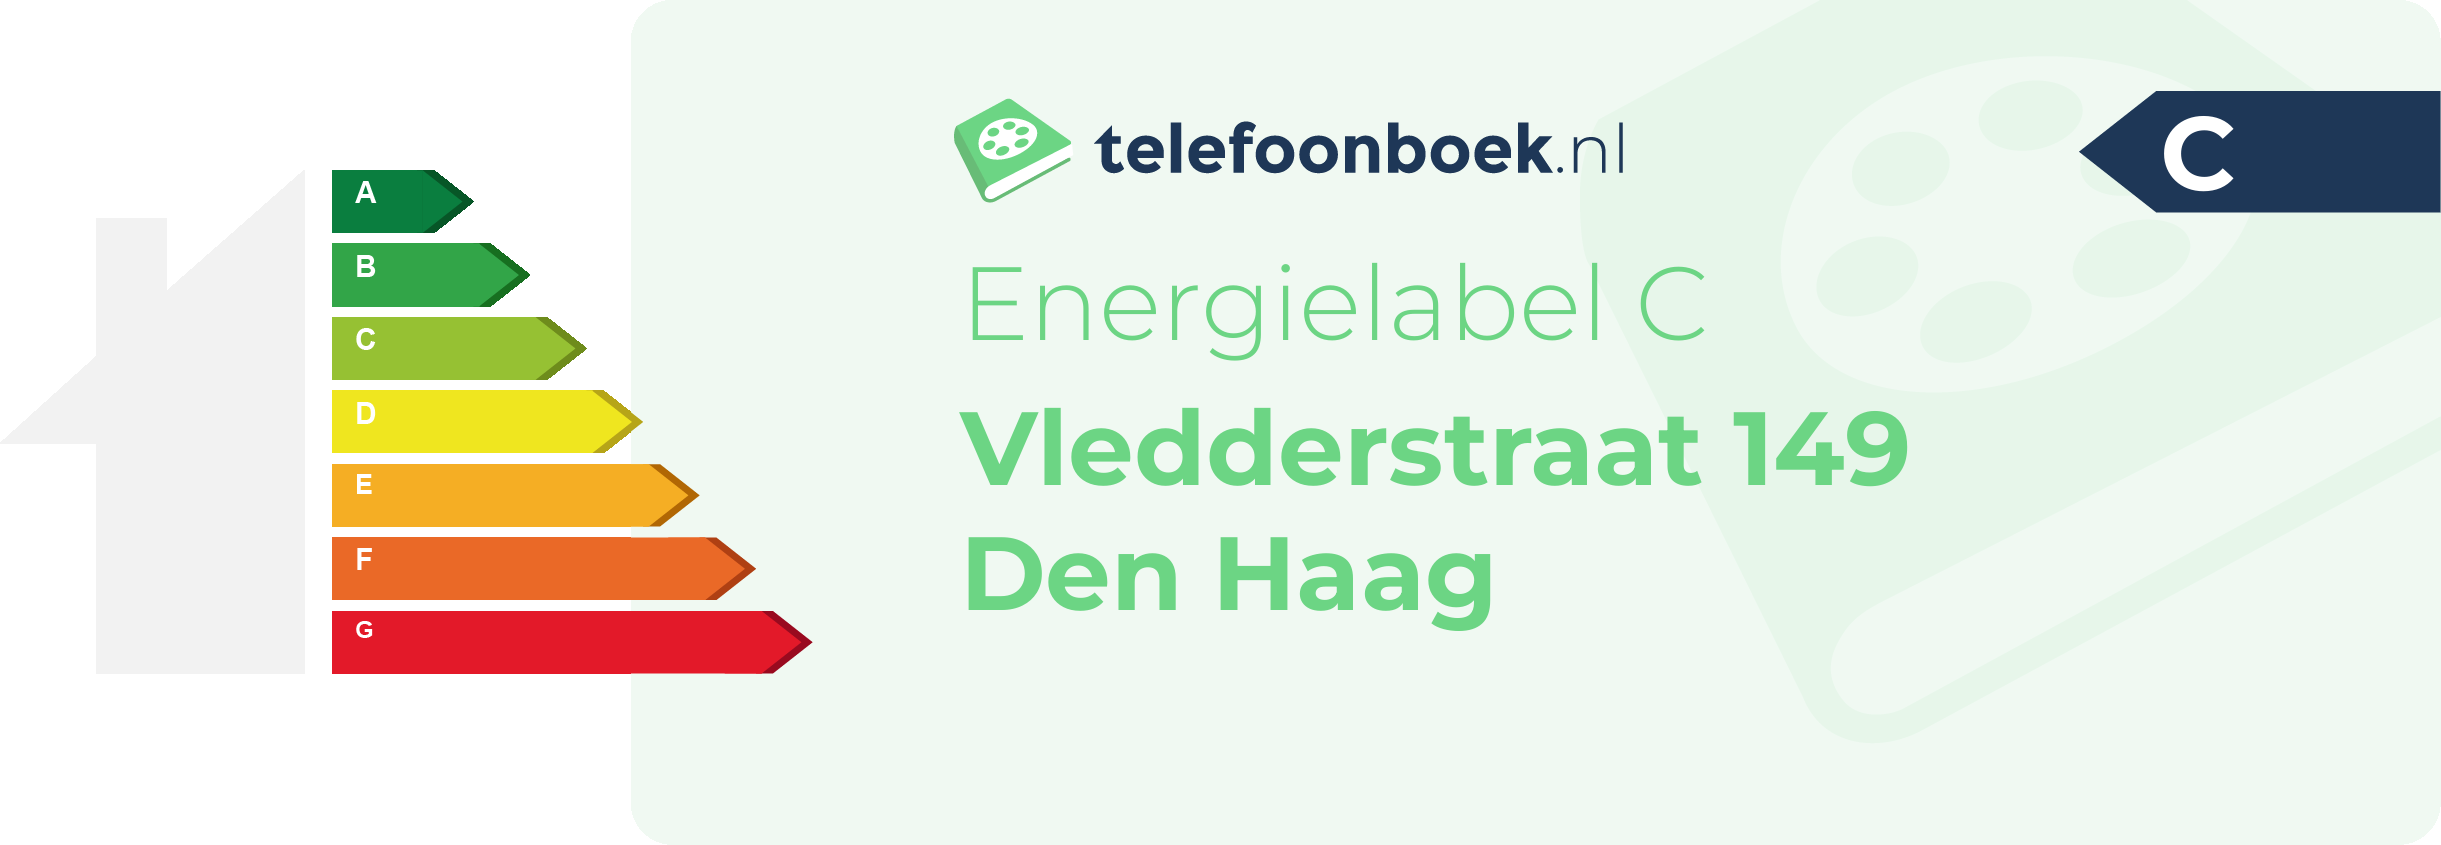 Energielabel Vledderstraat 149 Den Haag